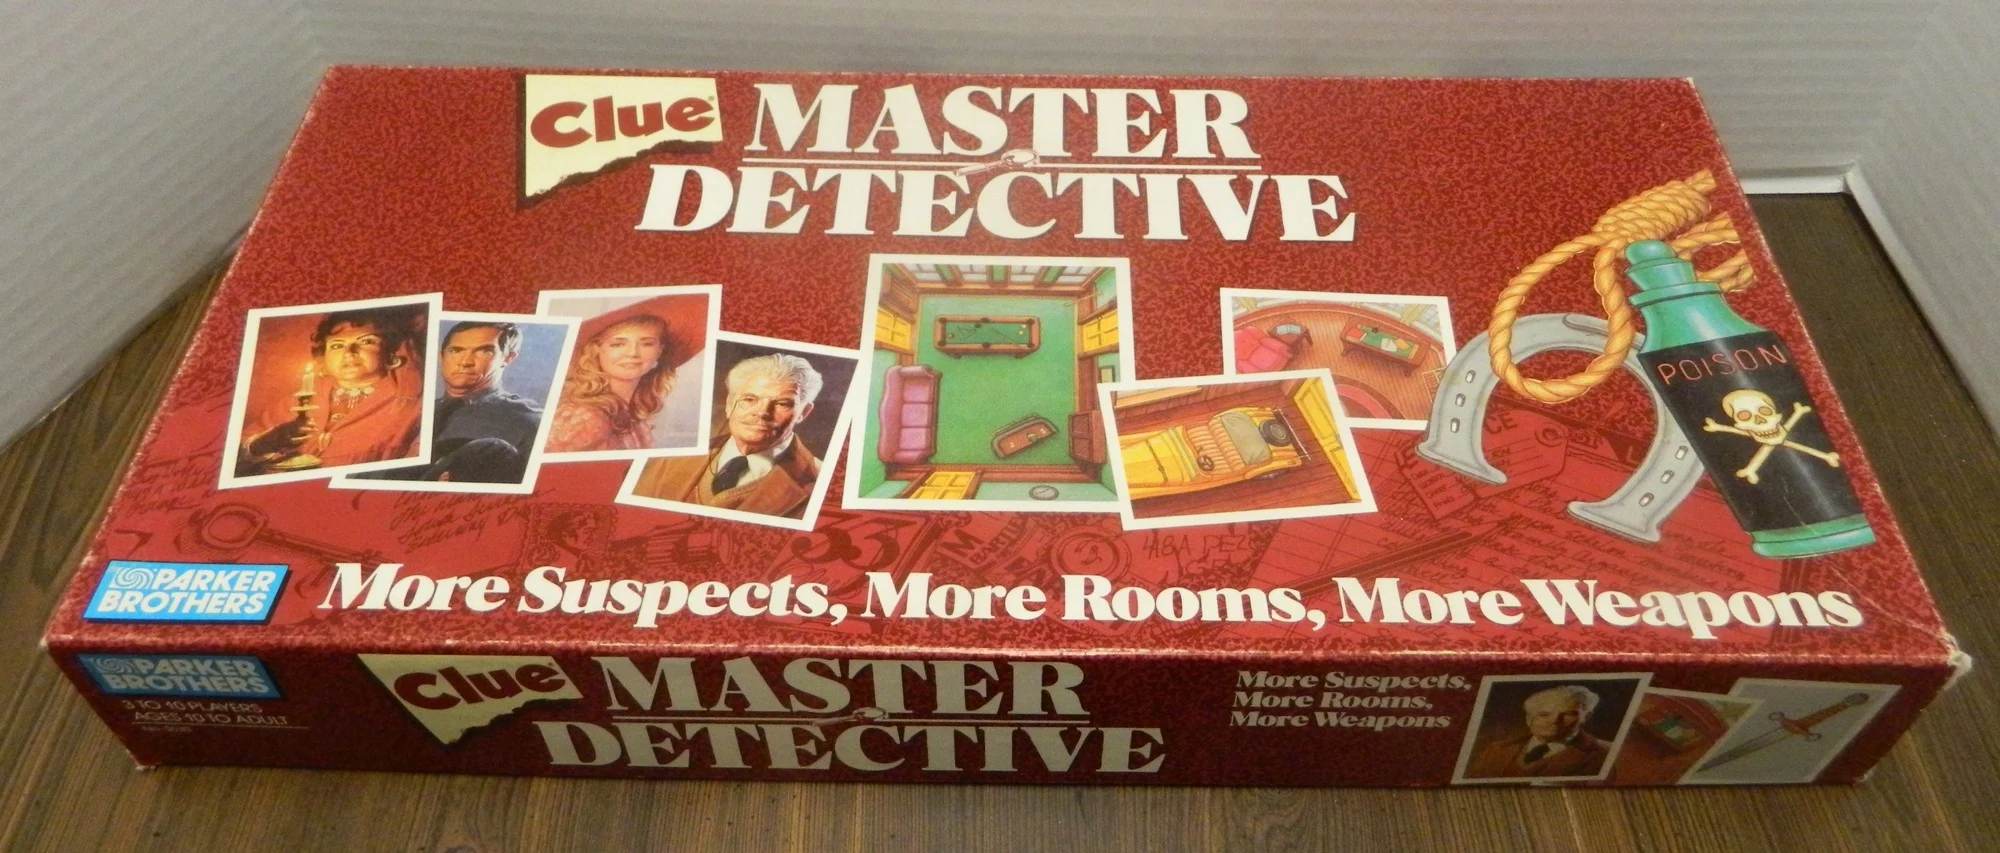 Clue Master Detective Box